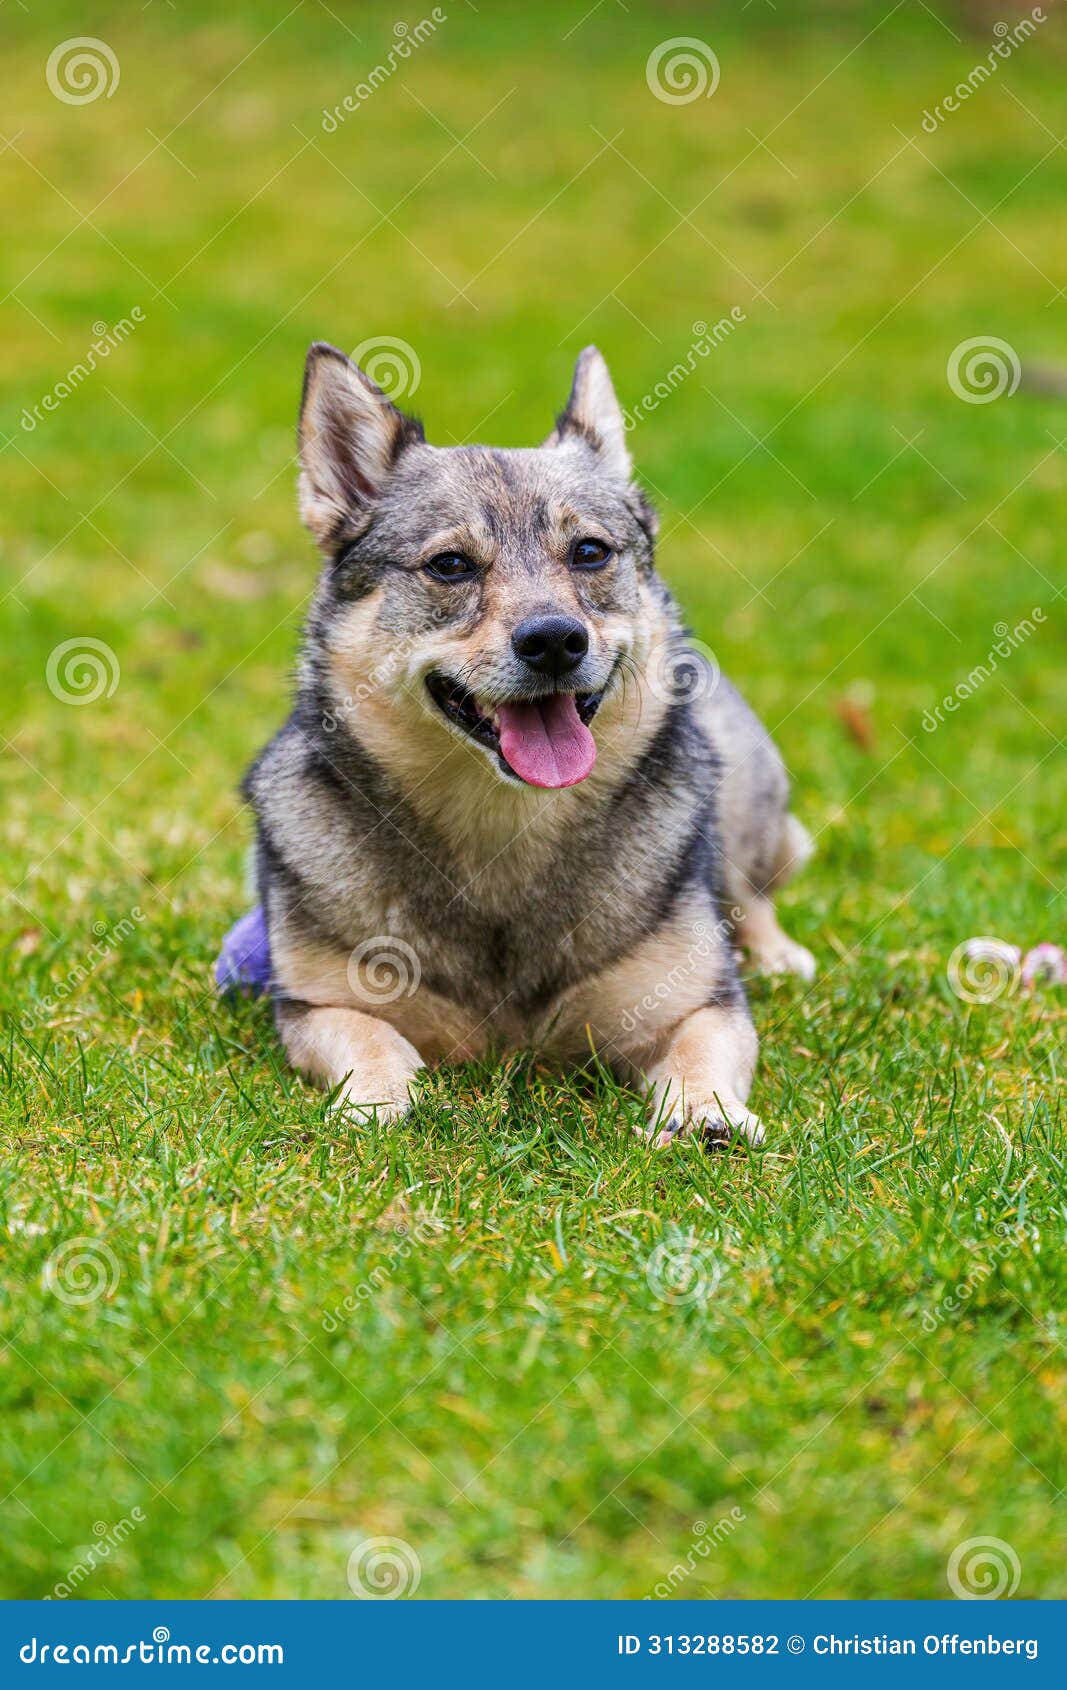 the dog breed visigoth spitz or swedish vallhund is lying on green grass